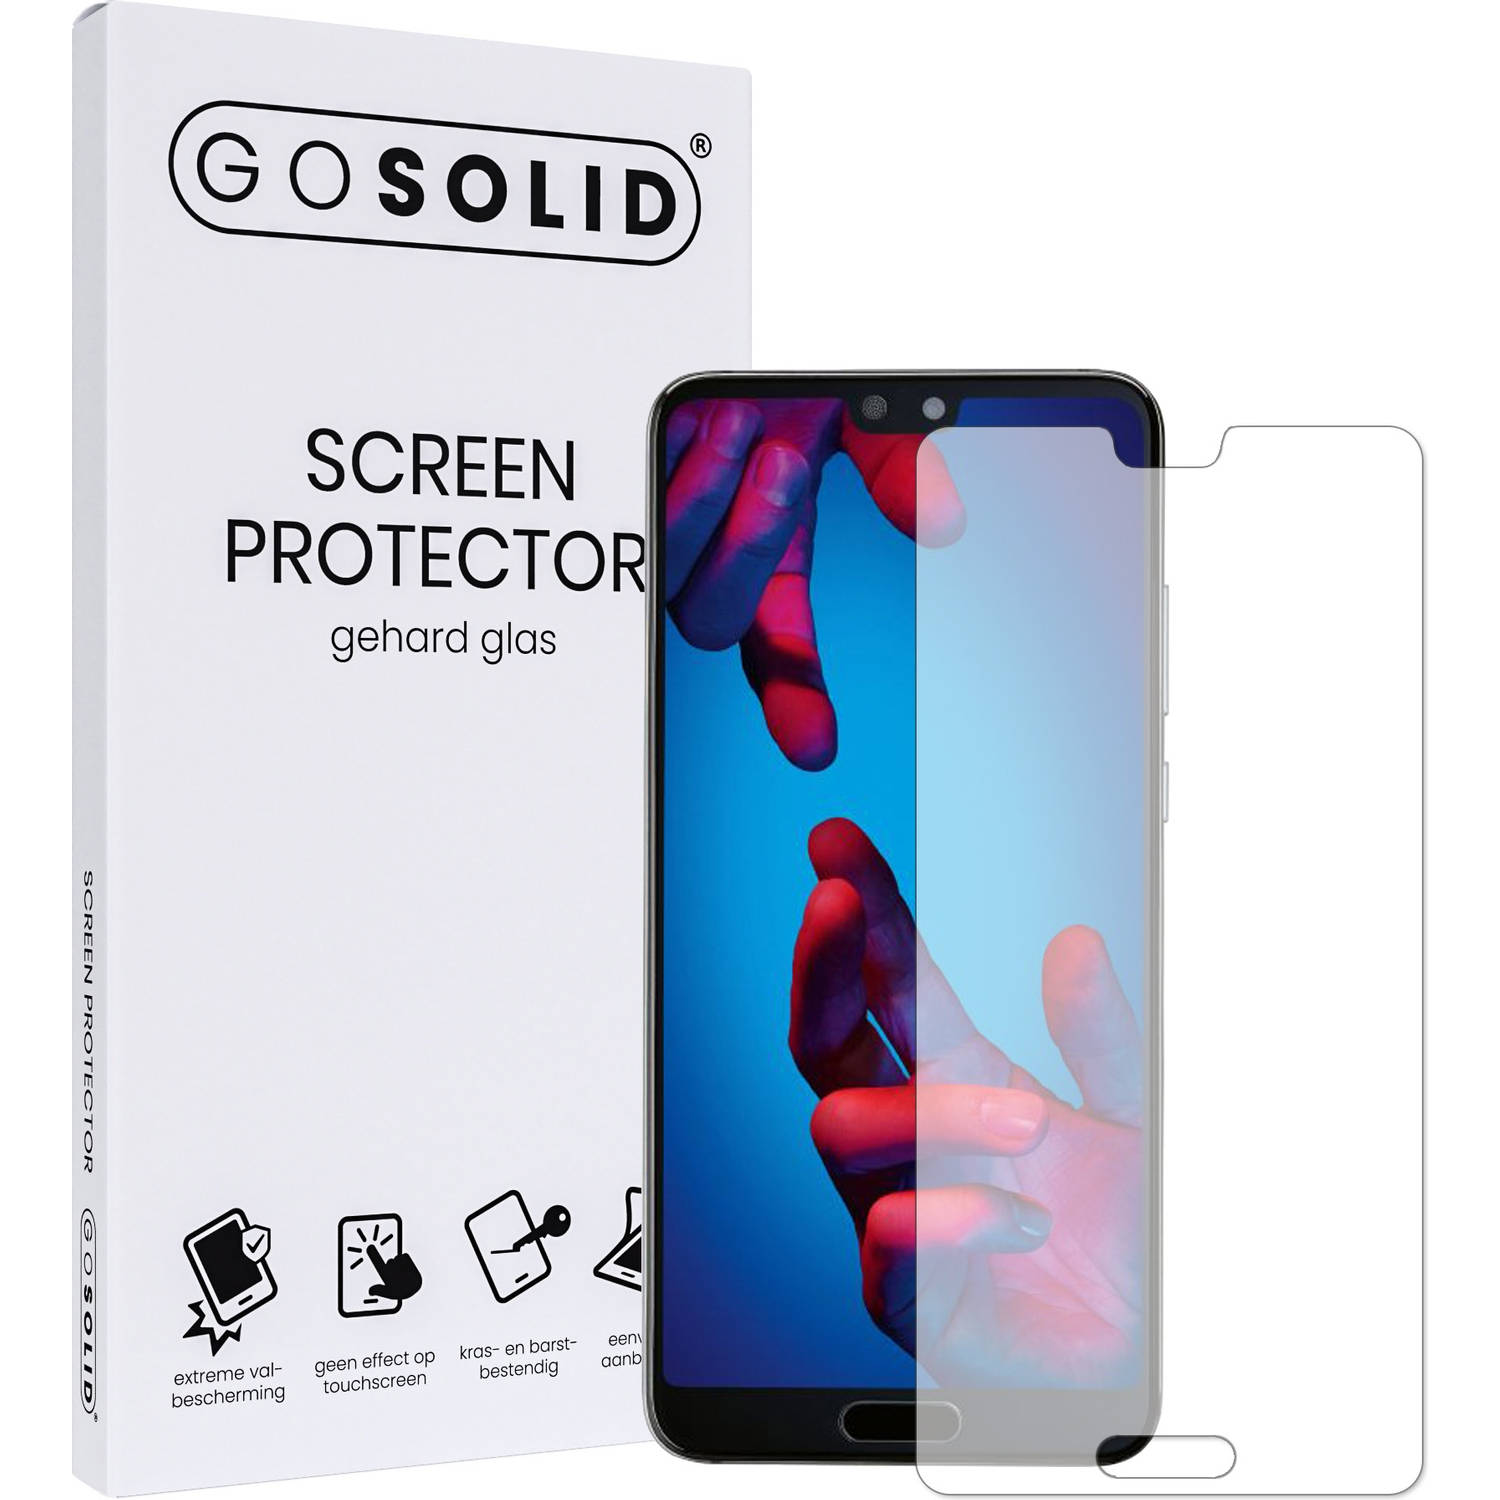 GO SOLID! ® Screenprotector voor Huawei P20 Pro gehard glas